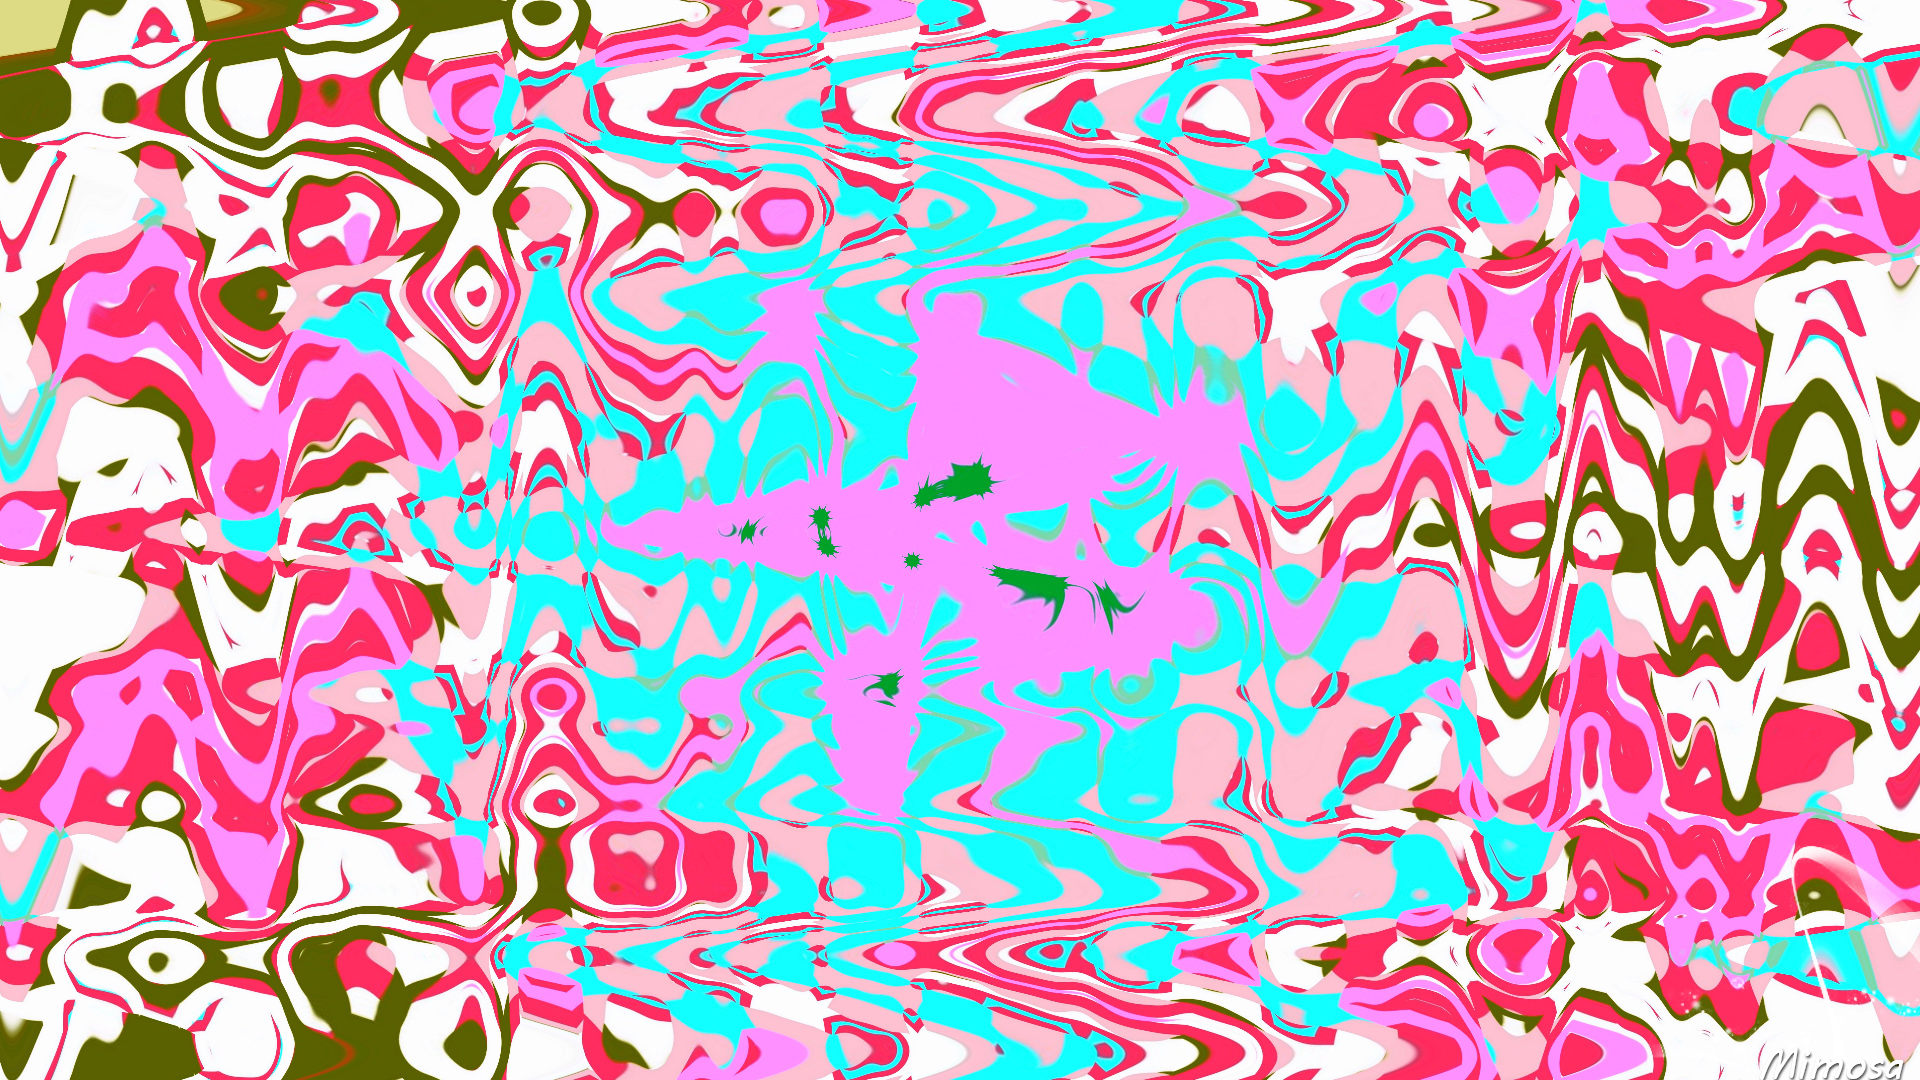 Artistic Digital Art Colors Wave Pink Red 1920x1080